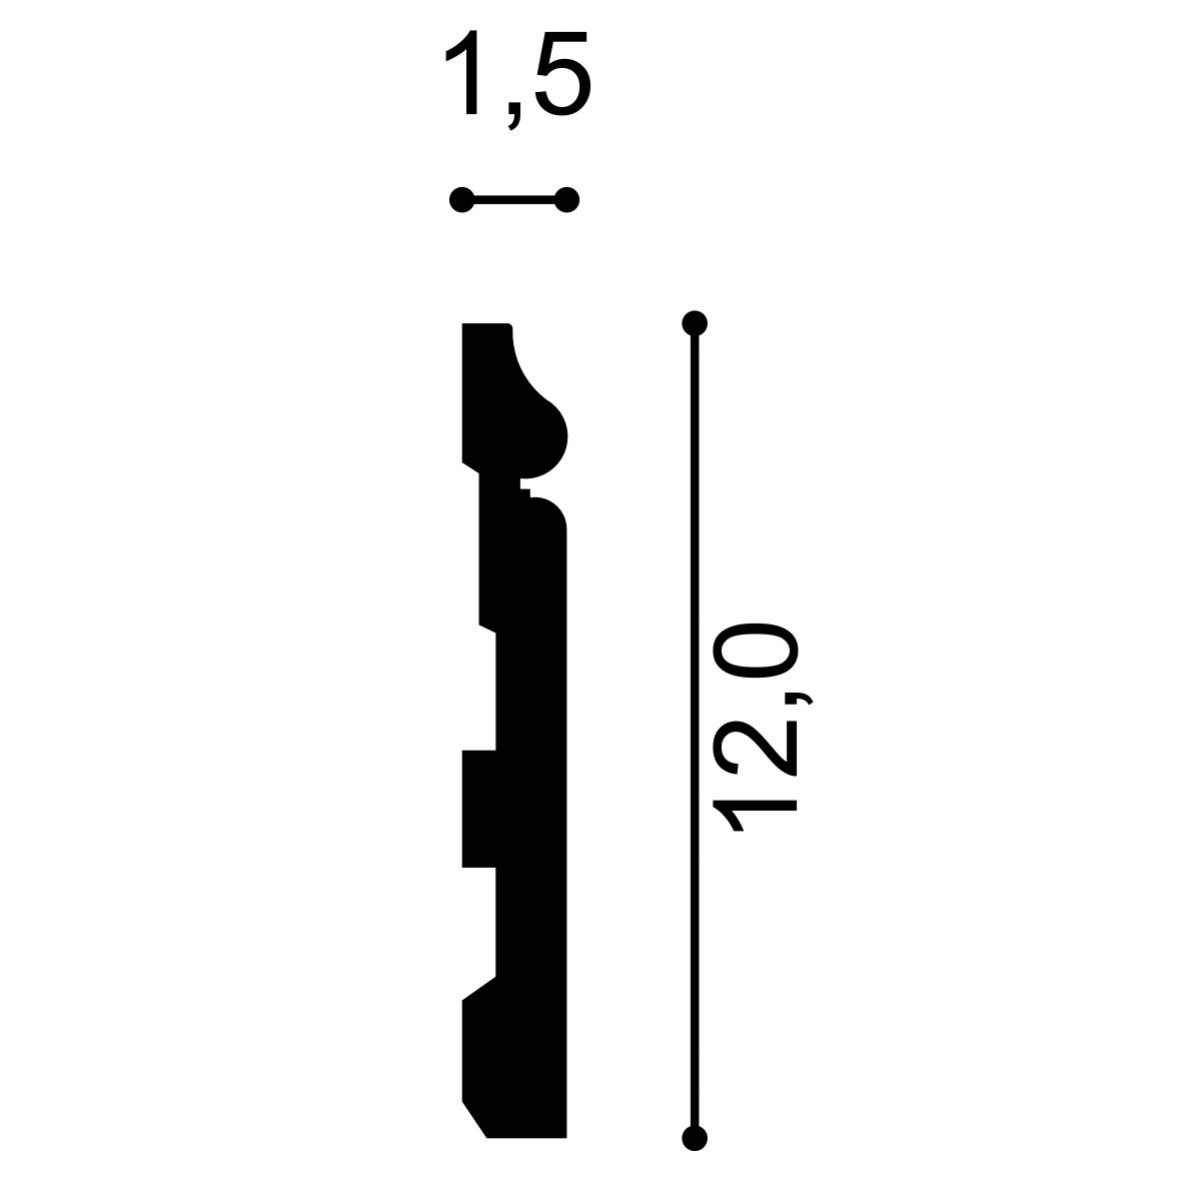 Plinta S14, Dimensiuni: 200 X 12 X 1.5 cm, Plinte decorative 